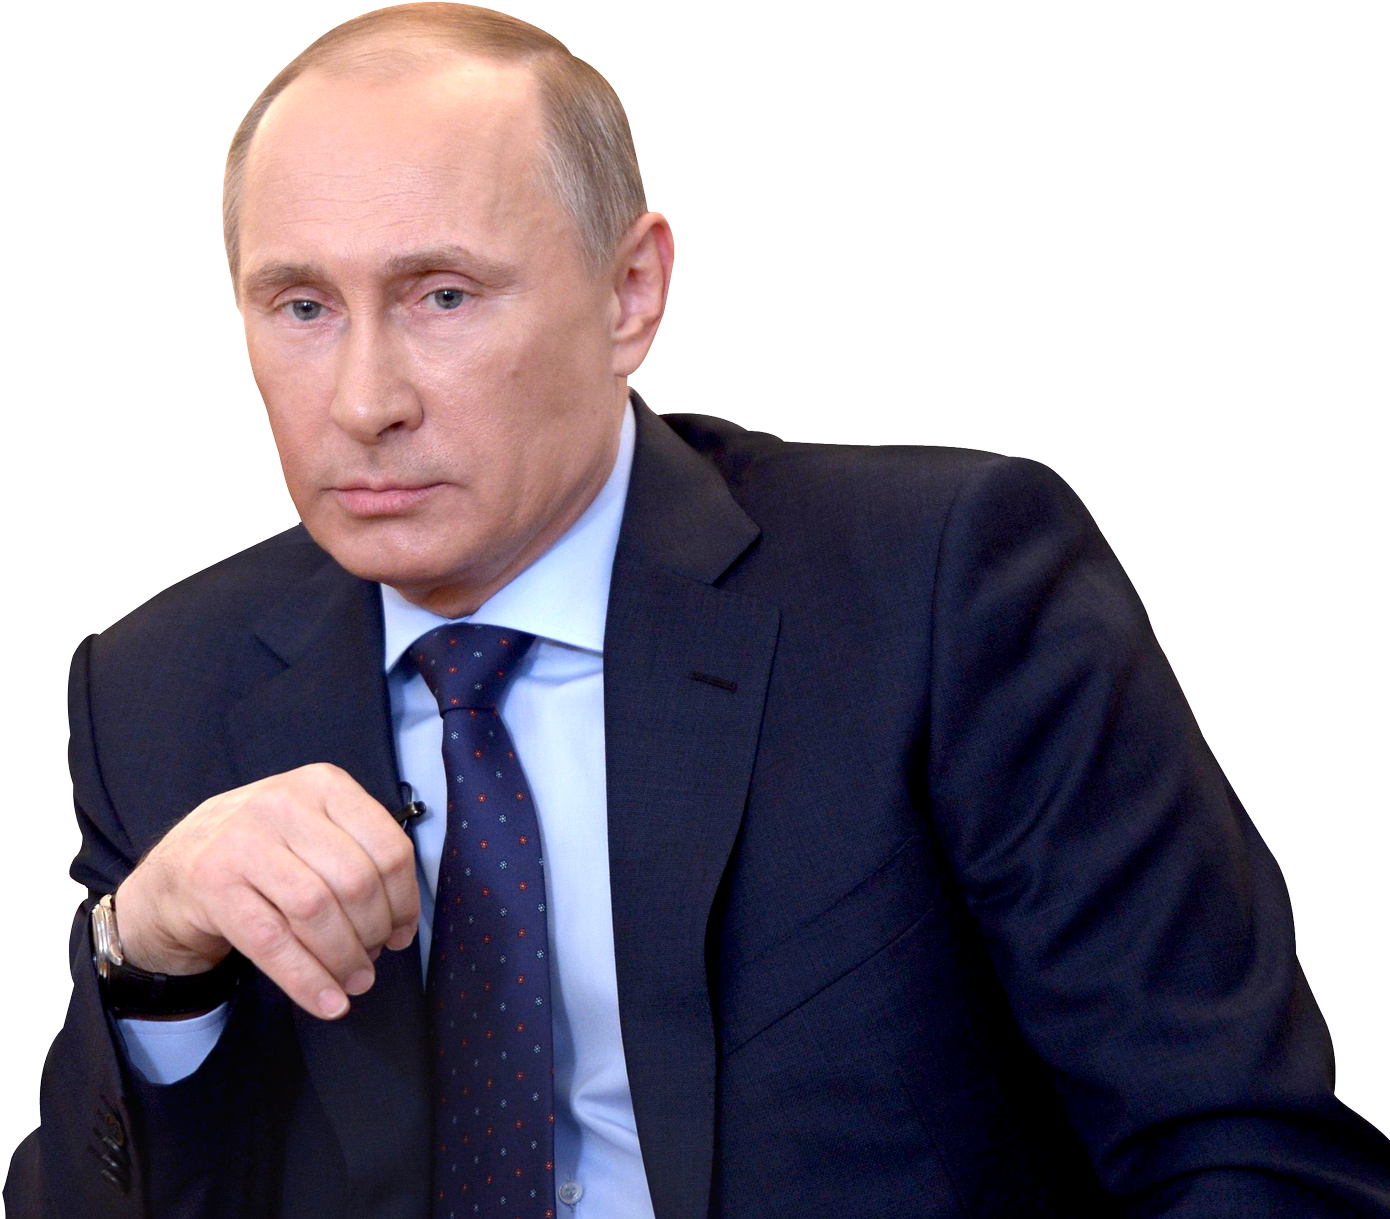 Vladimir Putin Portrait